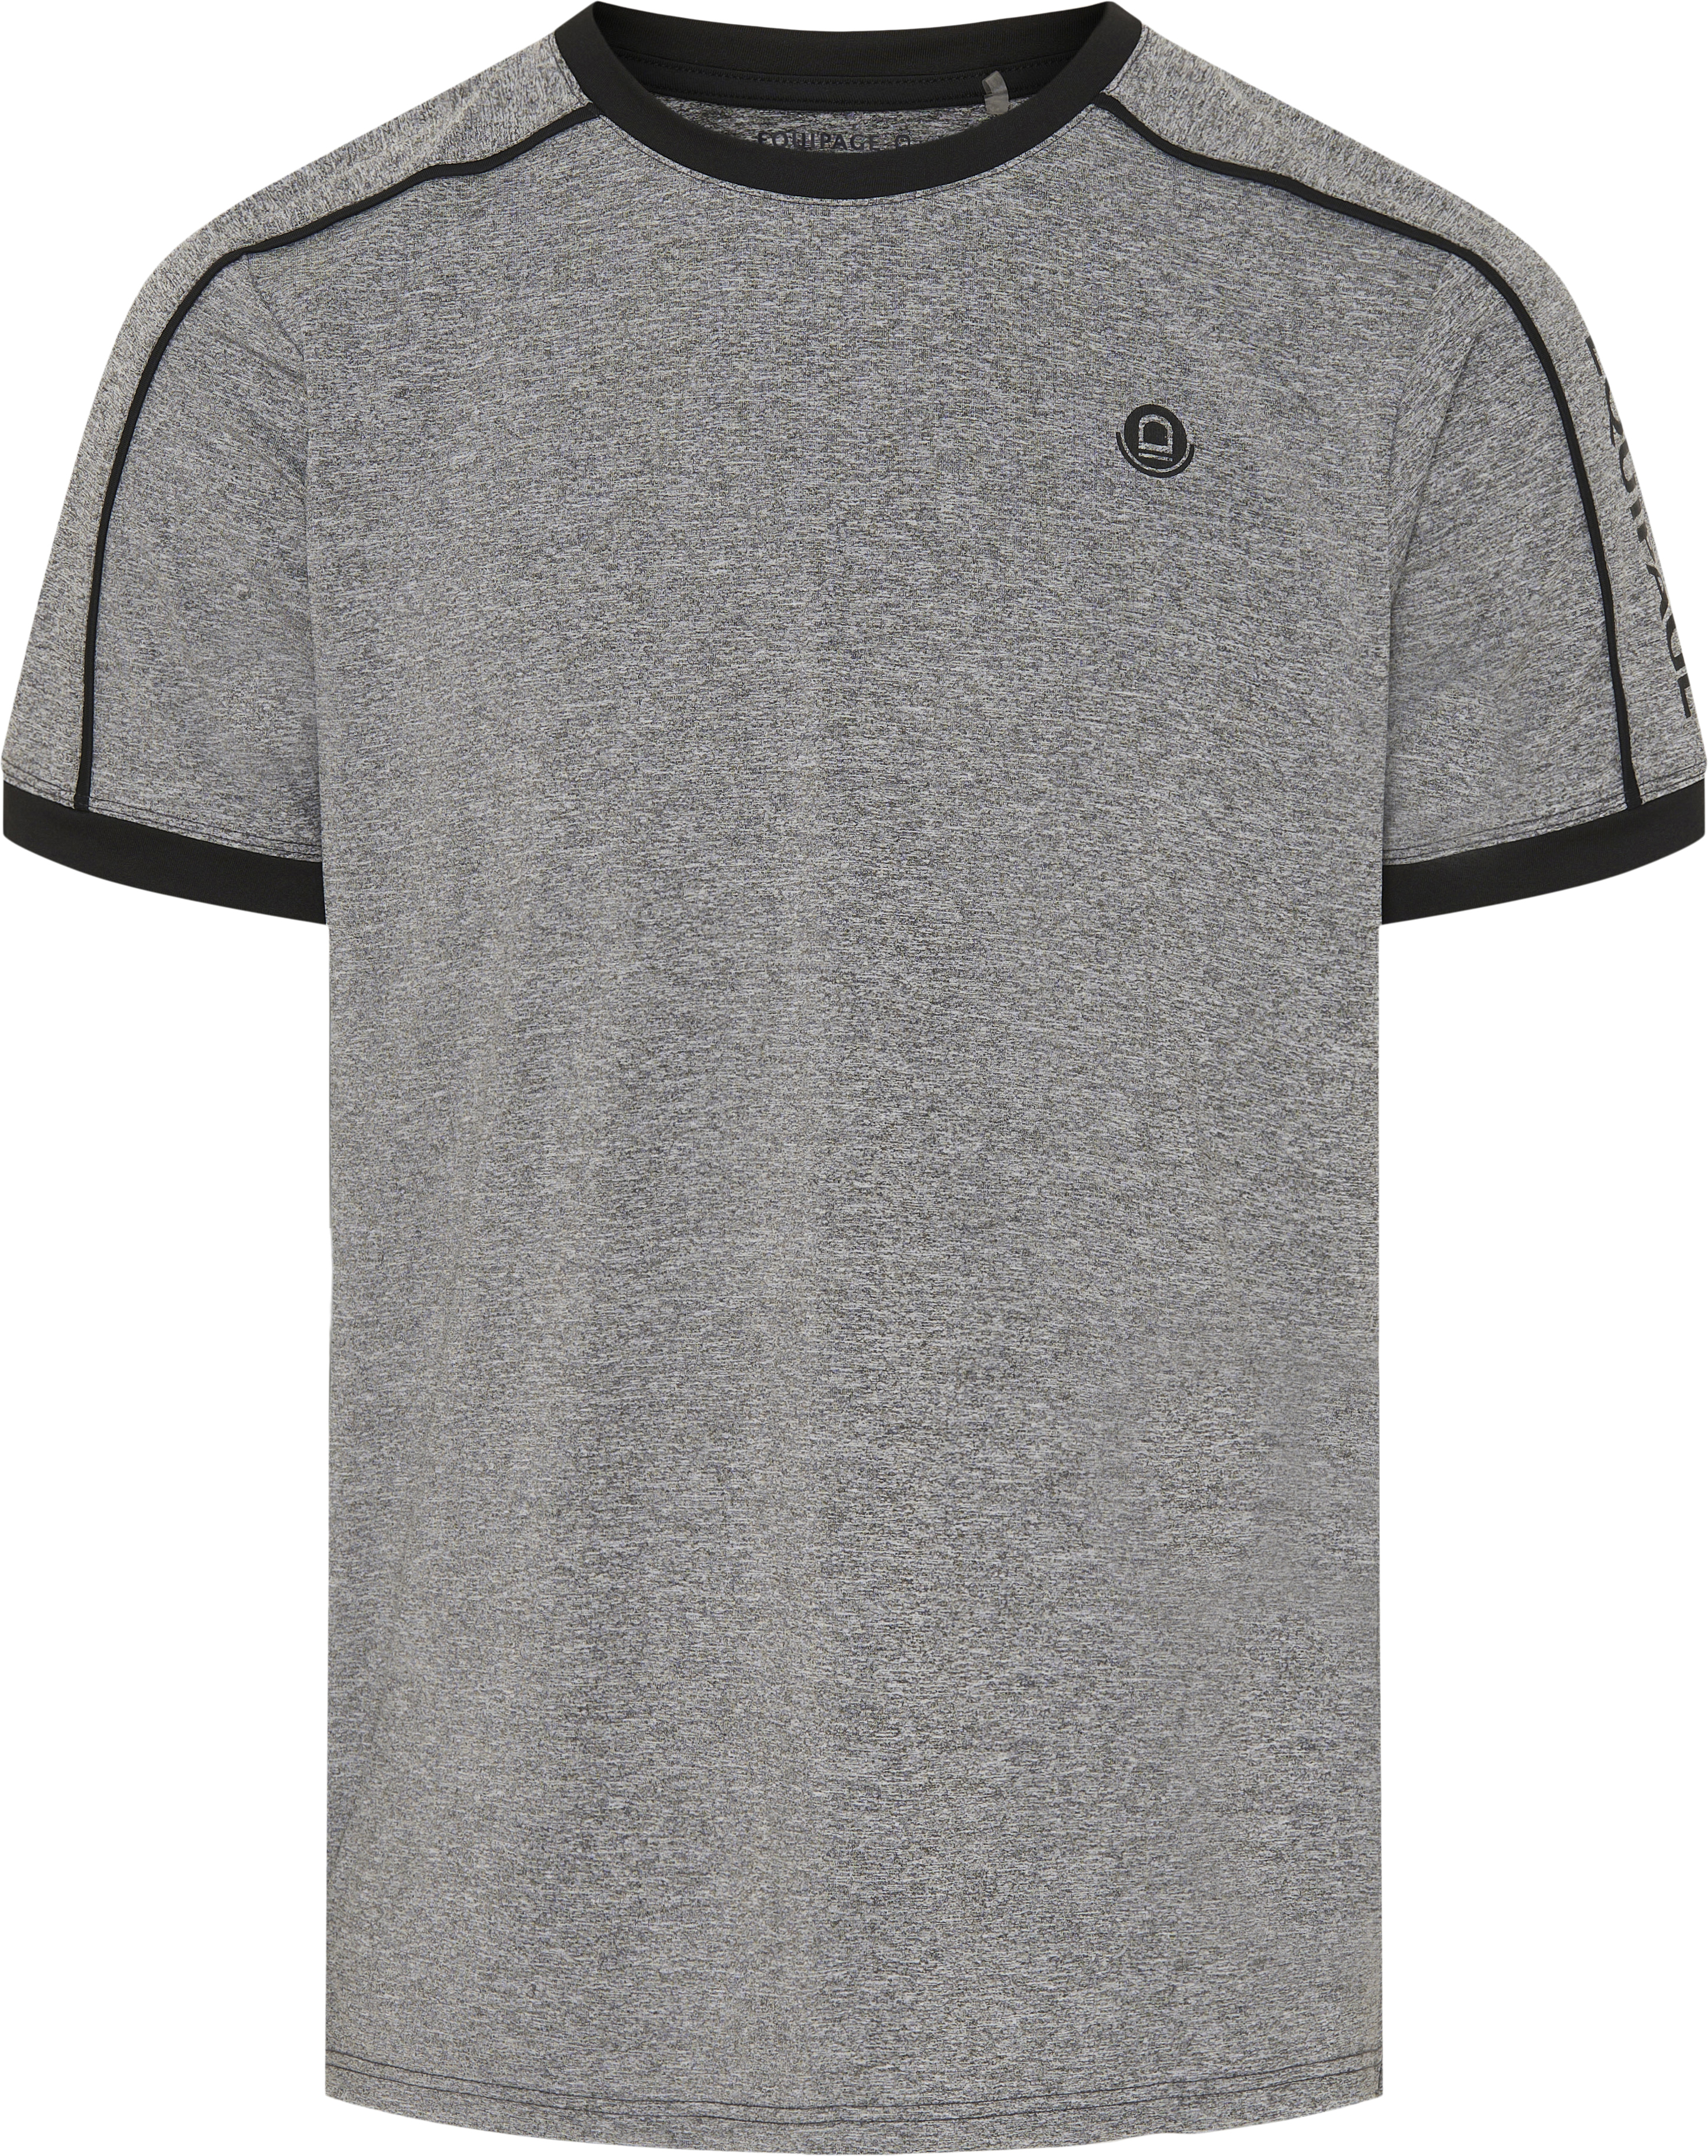 Equipage MEN Morgan T-shirt - Grey Melange (S)